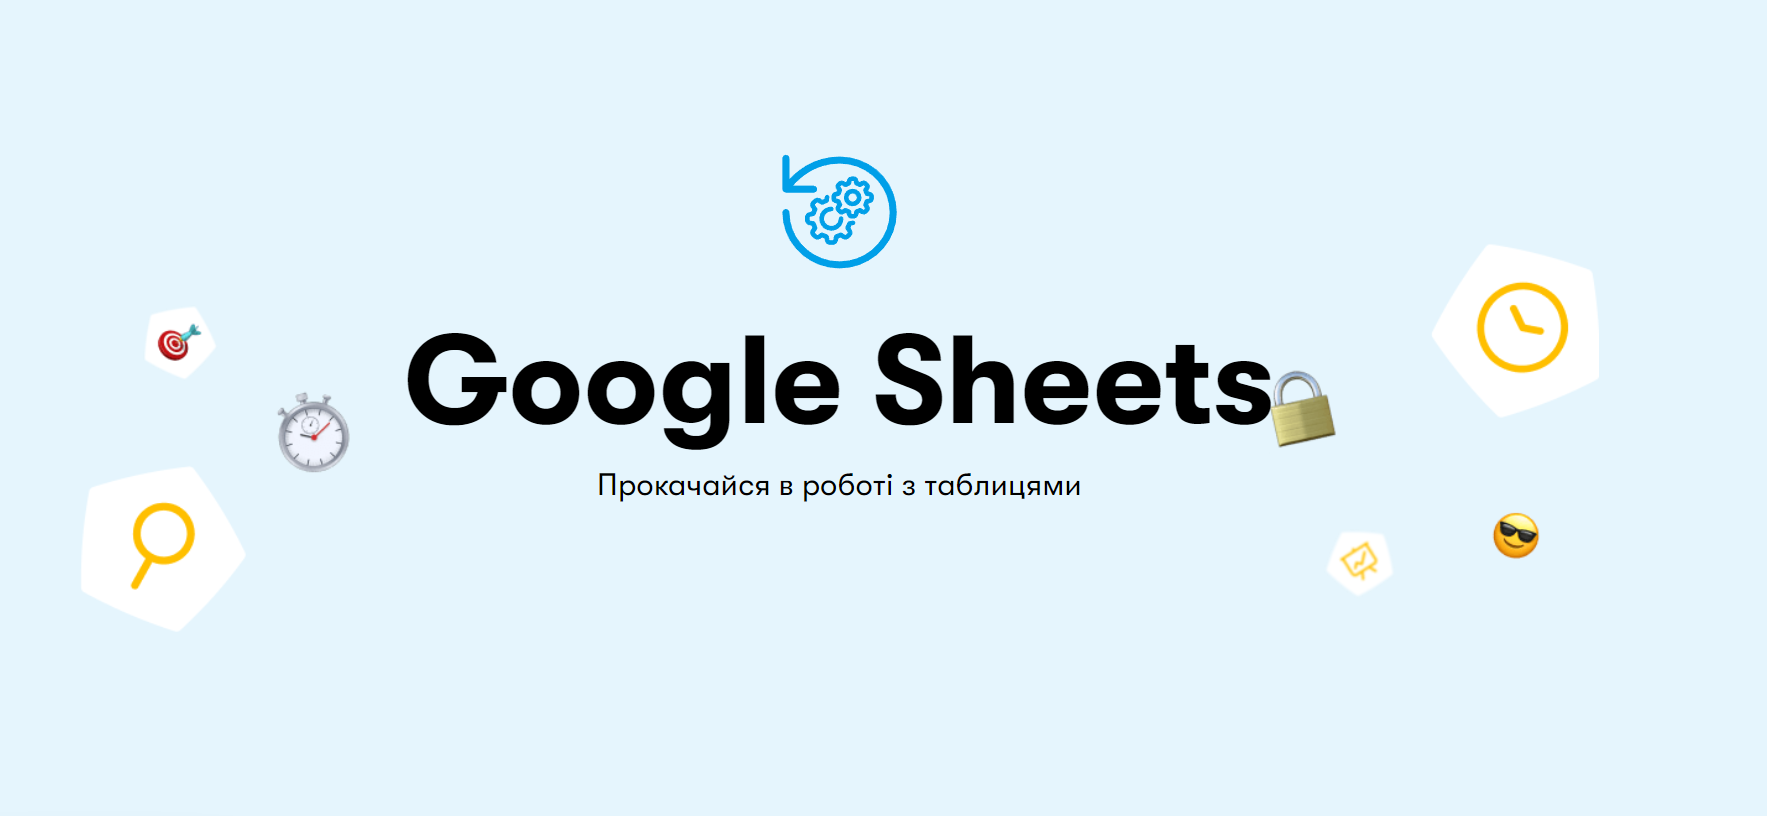 Курс “Google Sheets”